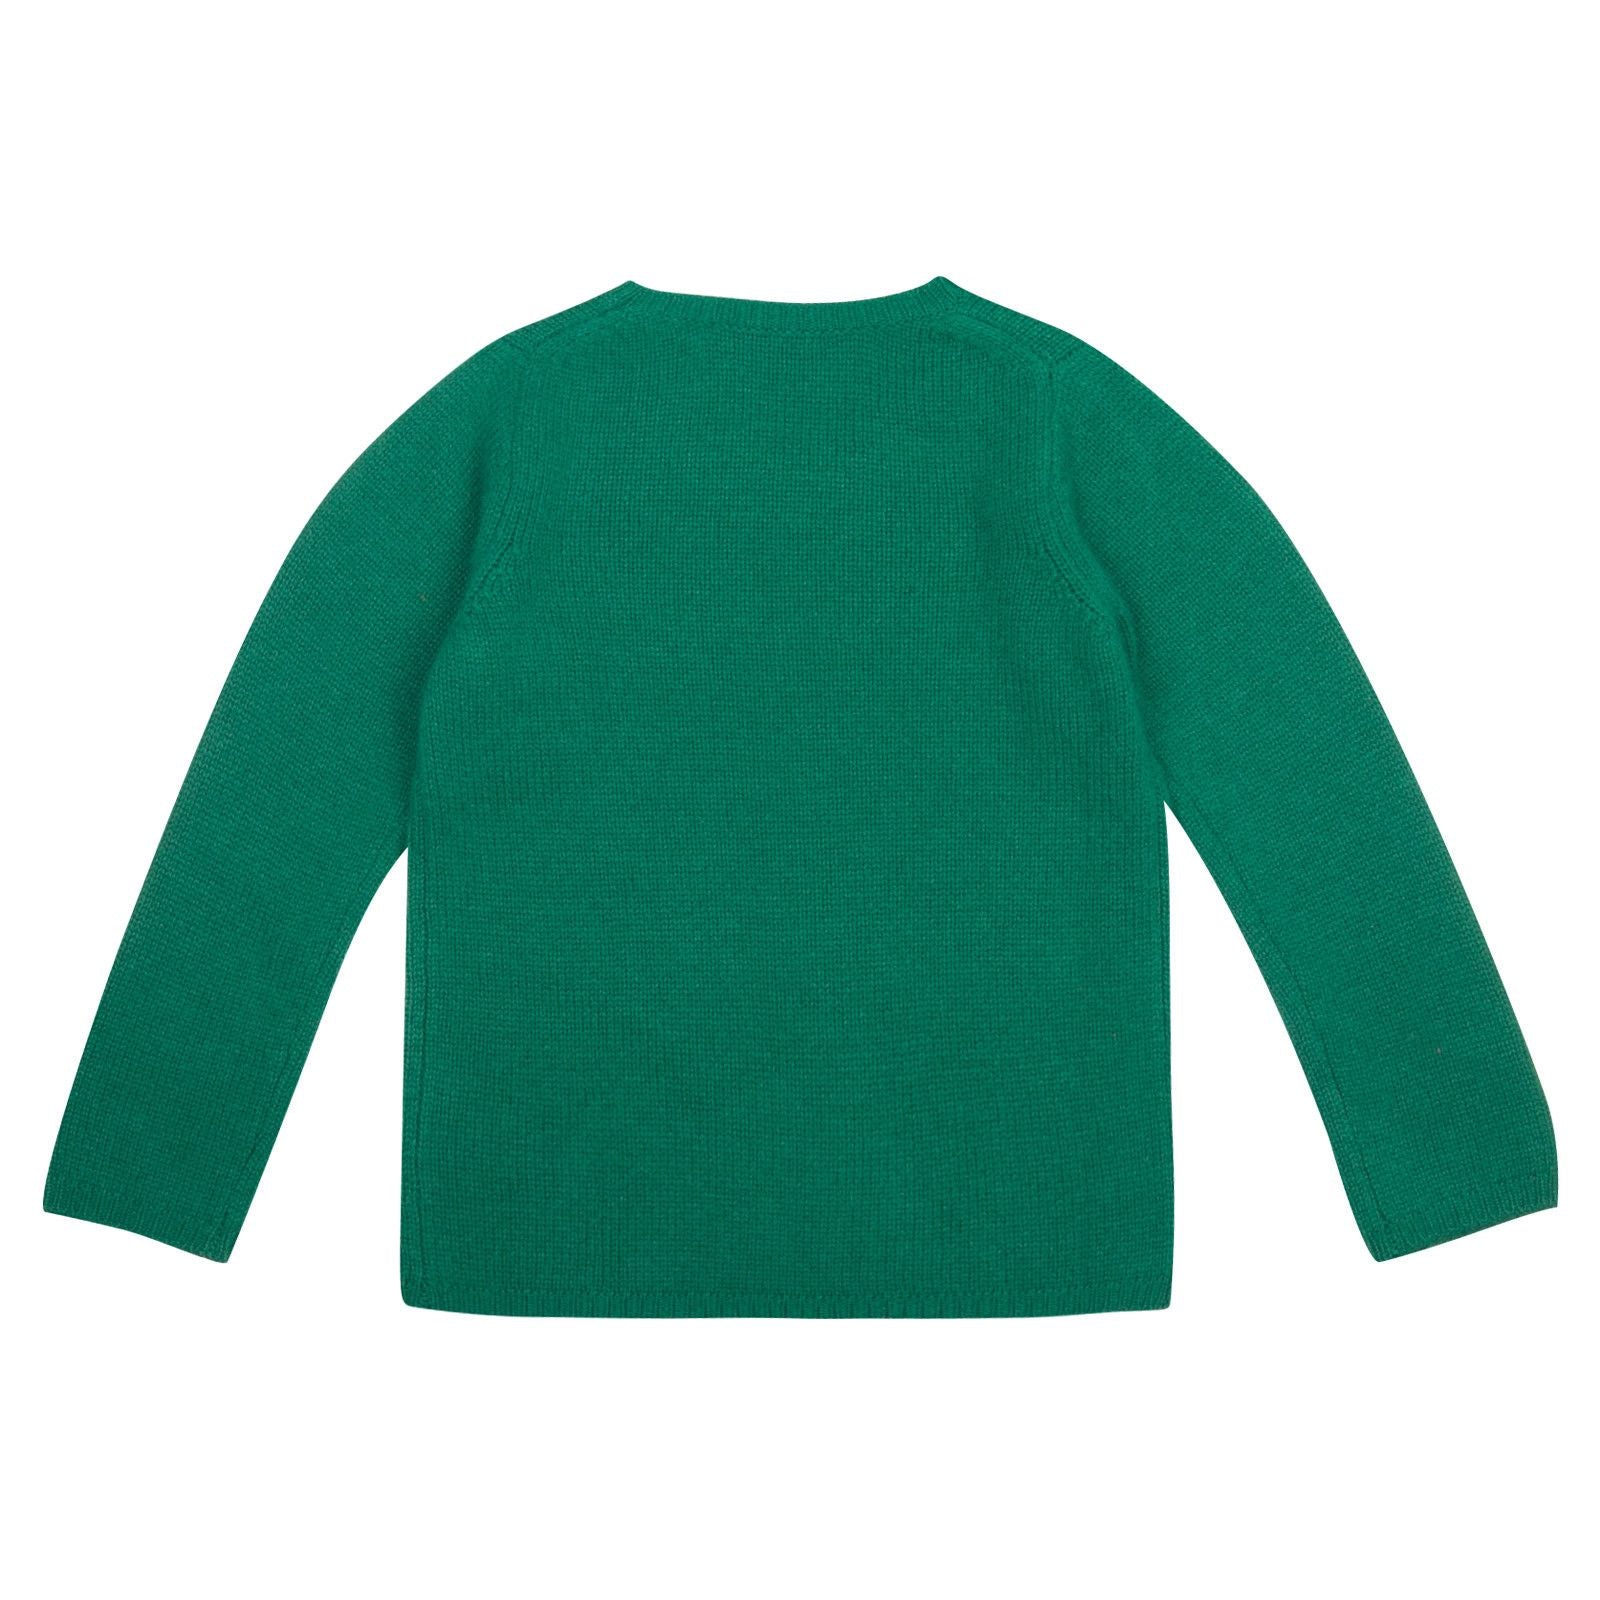 Boys Green Knitted Wool Greenwood Sweater - CÉMAROSE | Children's Fashion Store - 2